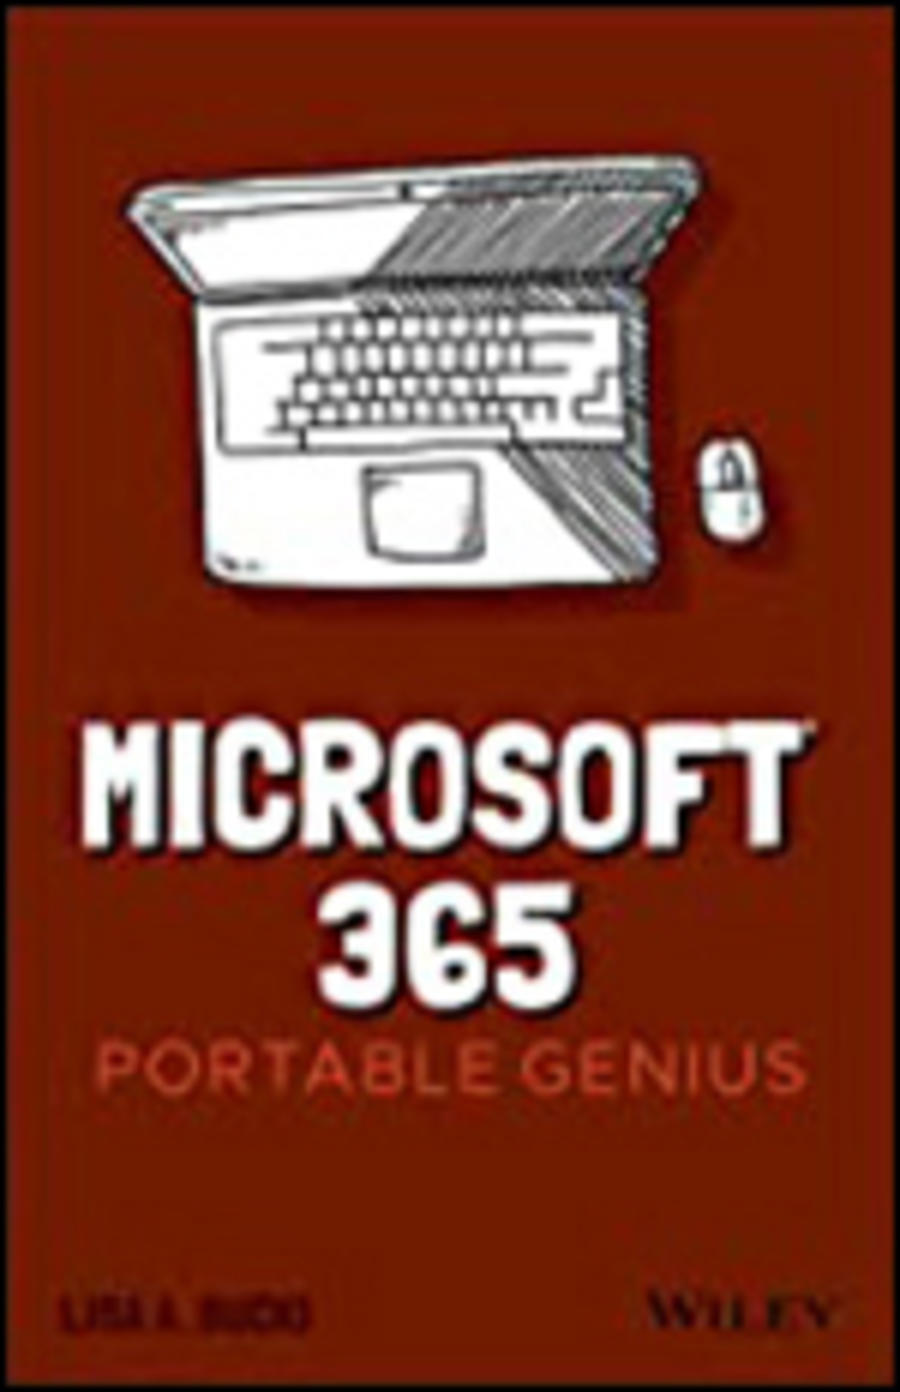 Bog om Microsoft 365